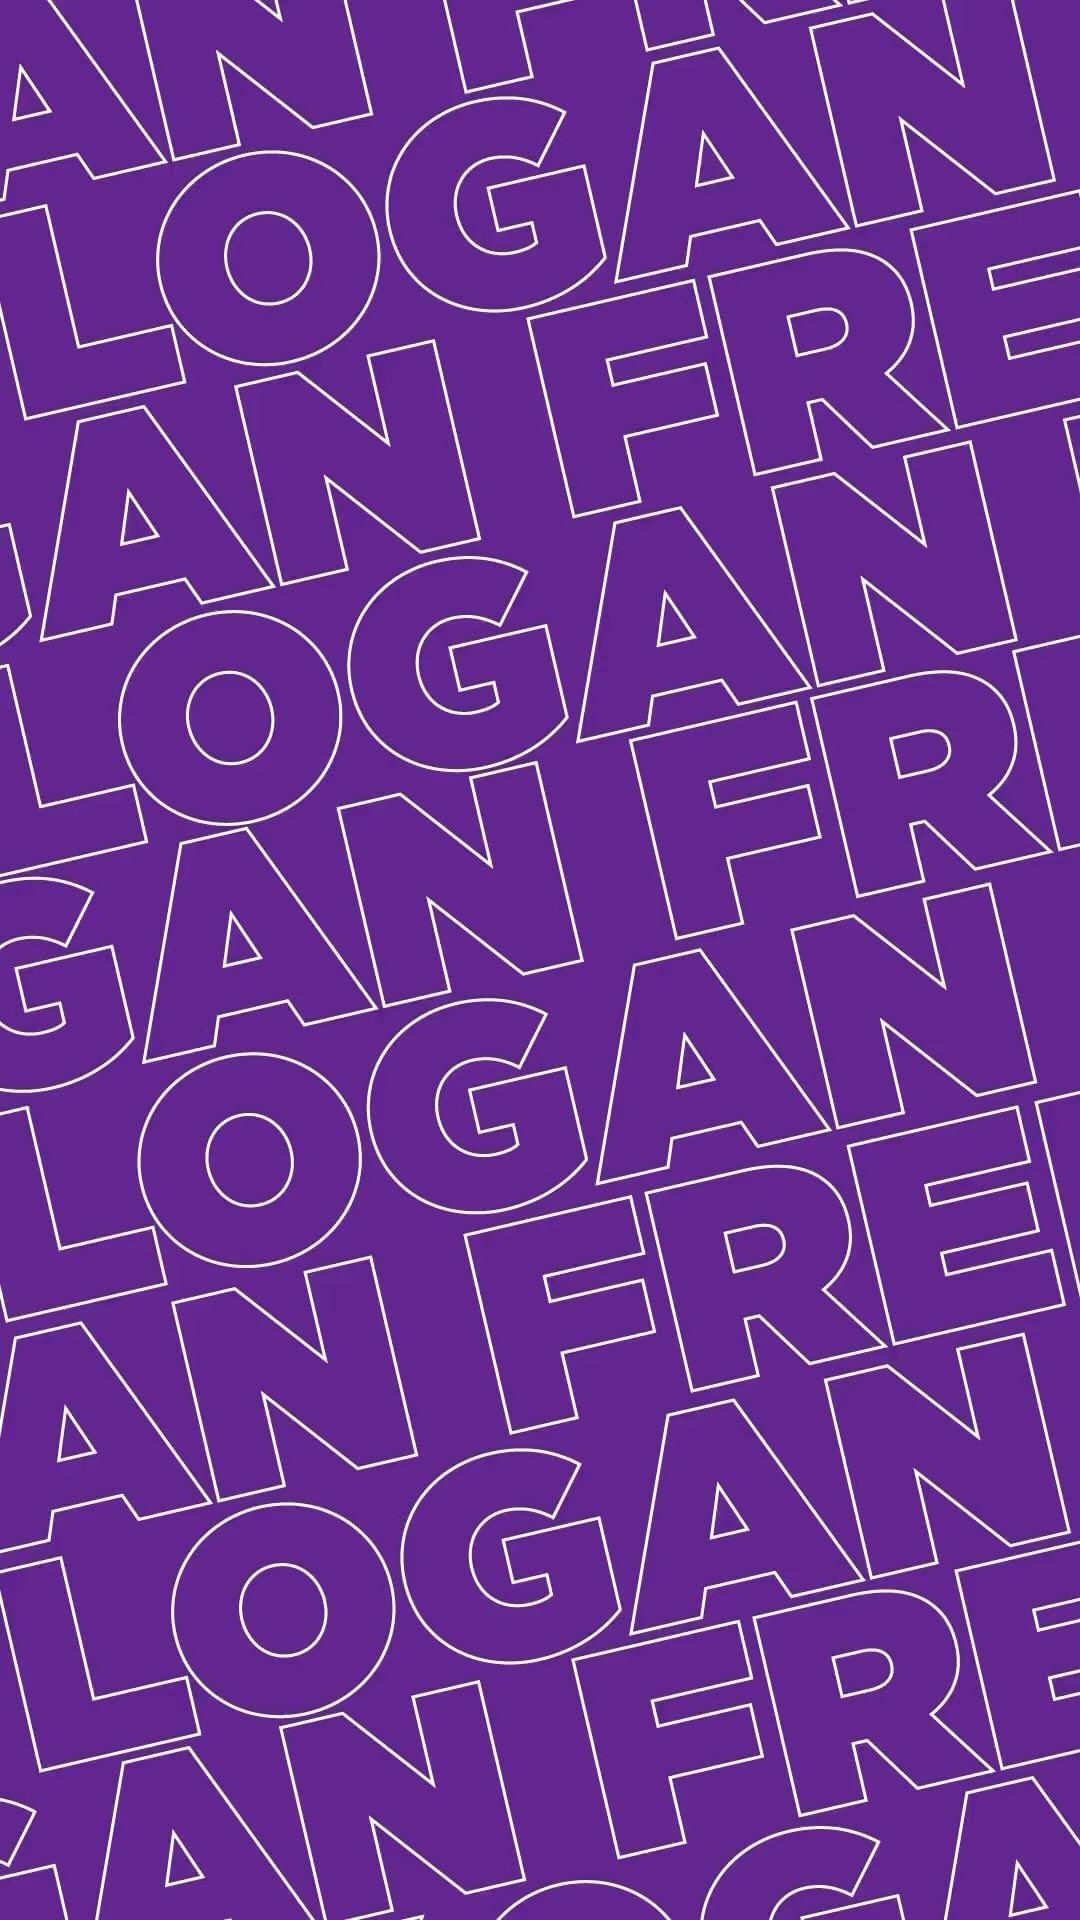 Logan ederic Instagram Post Influencer Campaign